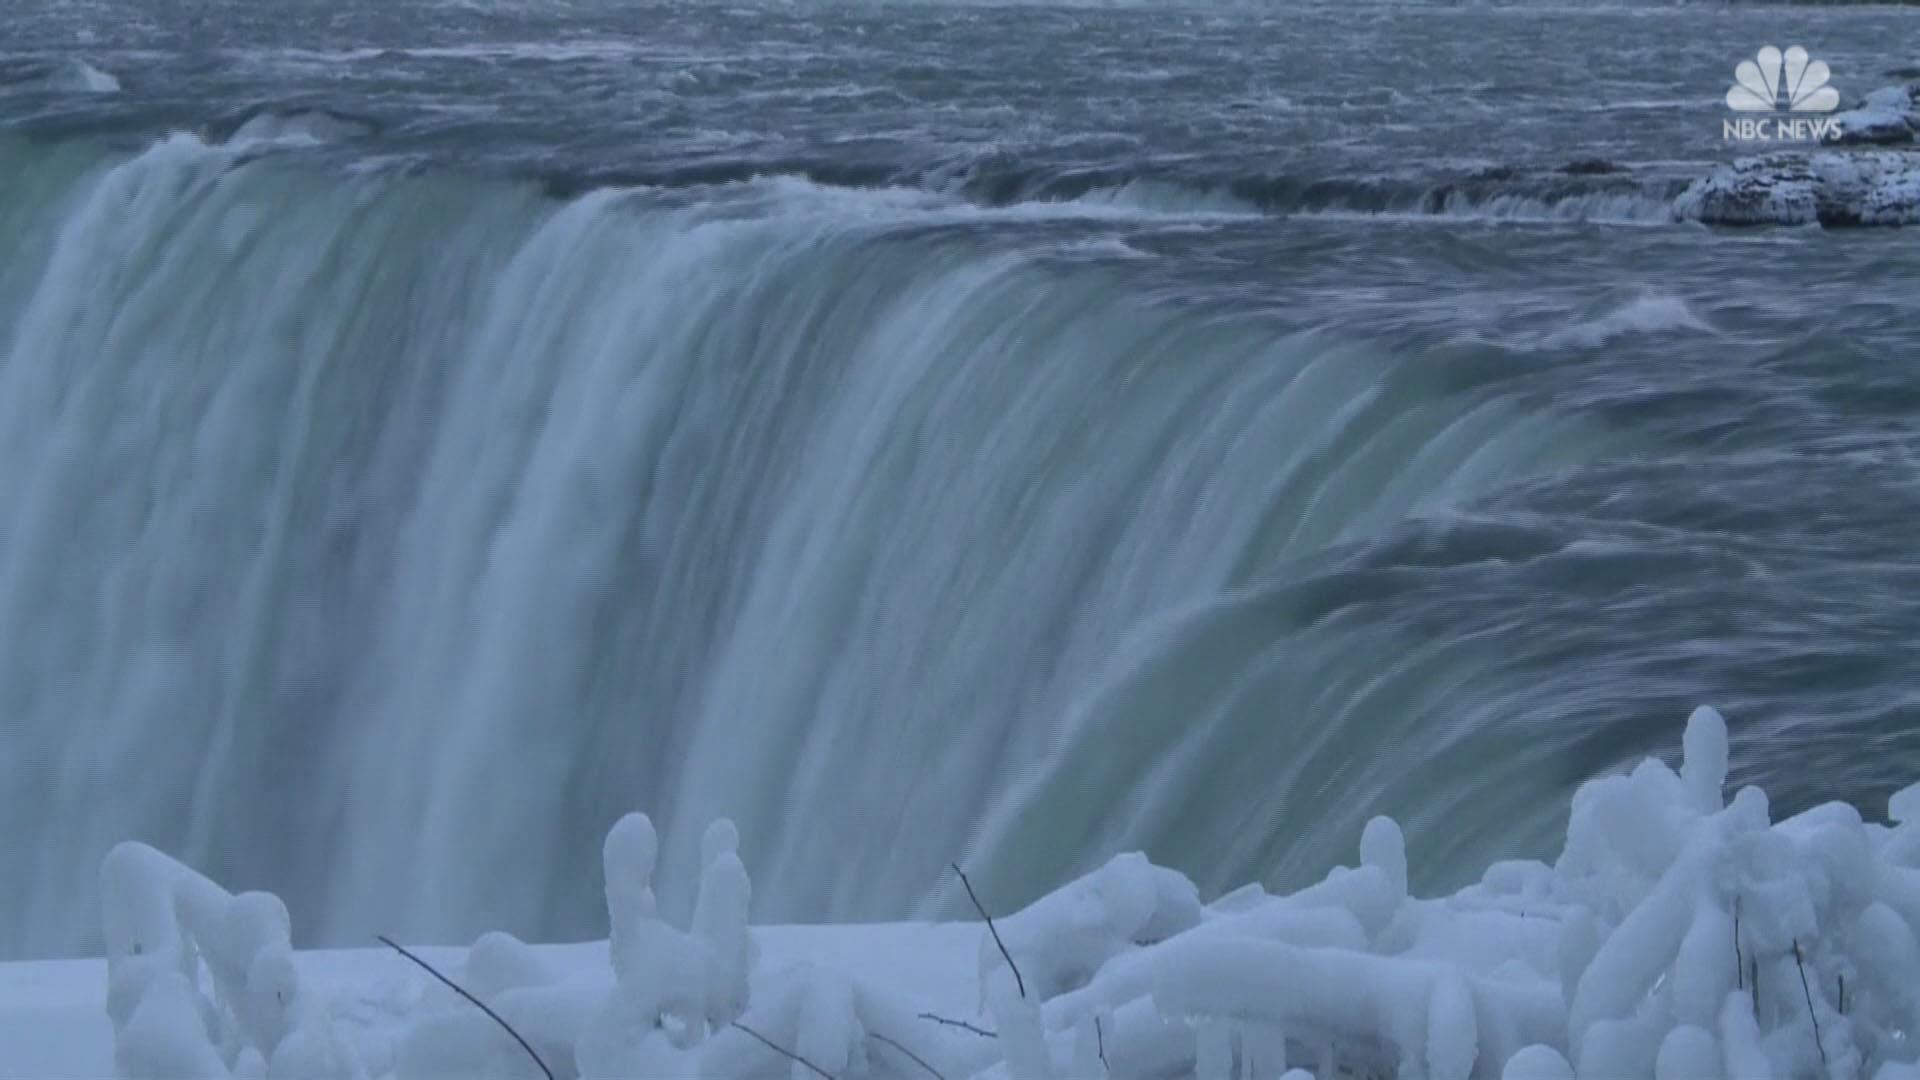 Niagara Falls turns into a 'Winter Wonderland' - NBC News